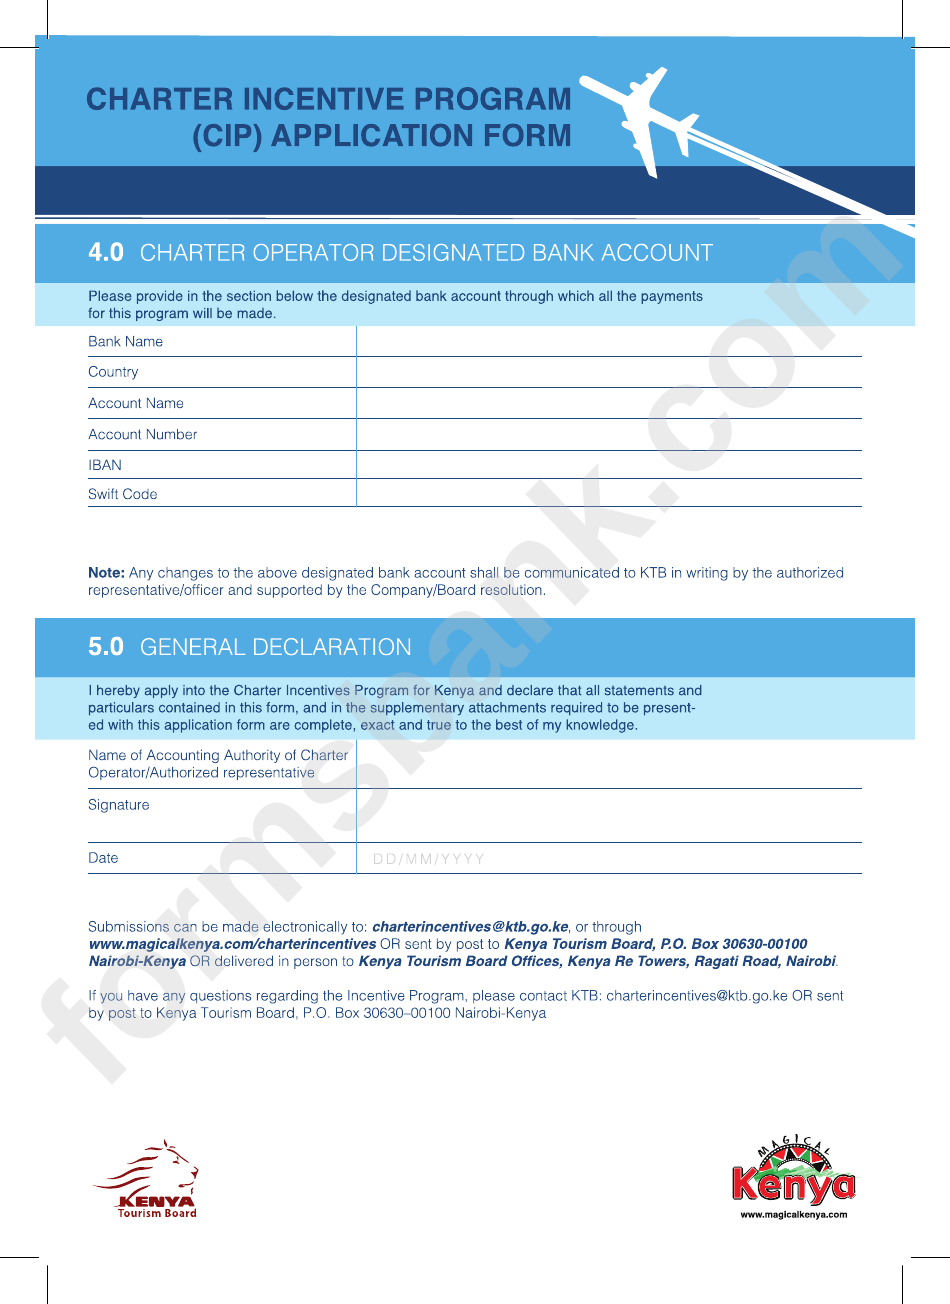 Charter Incentive Program (Cip) Application Form